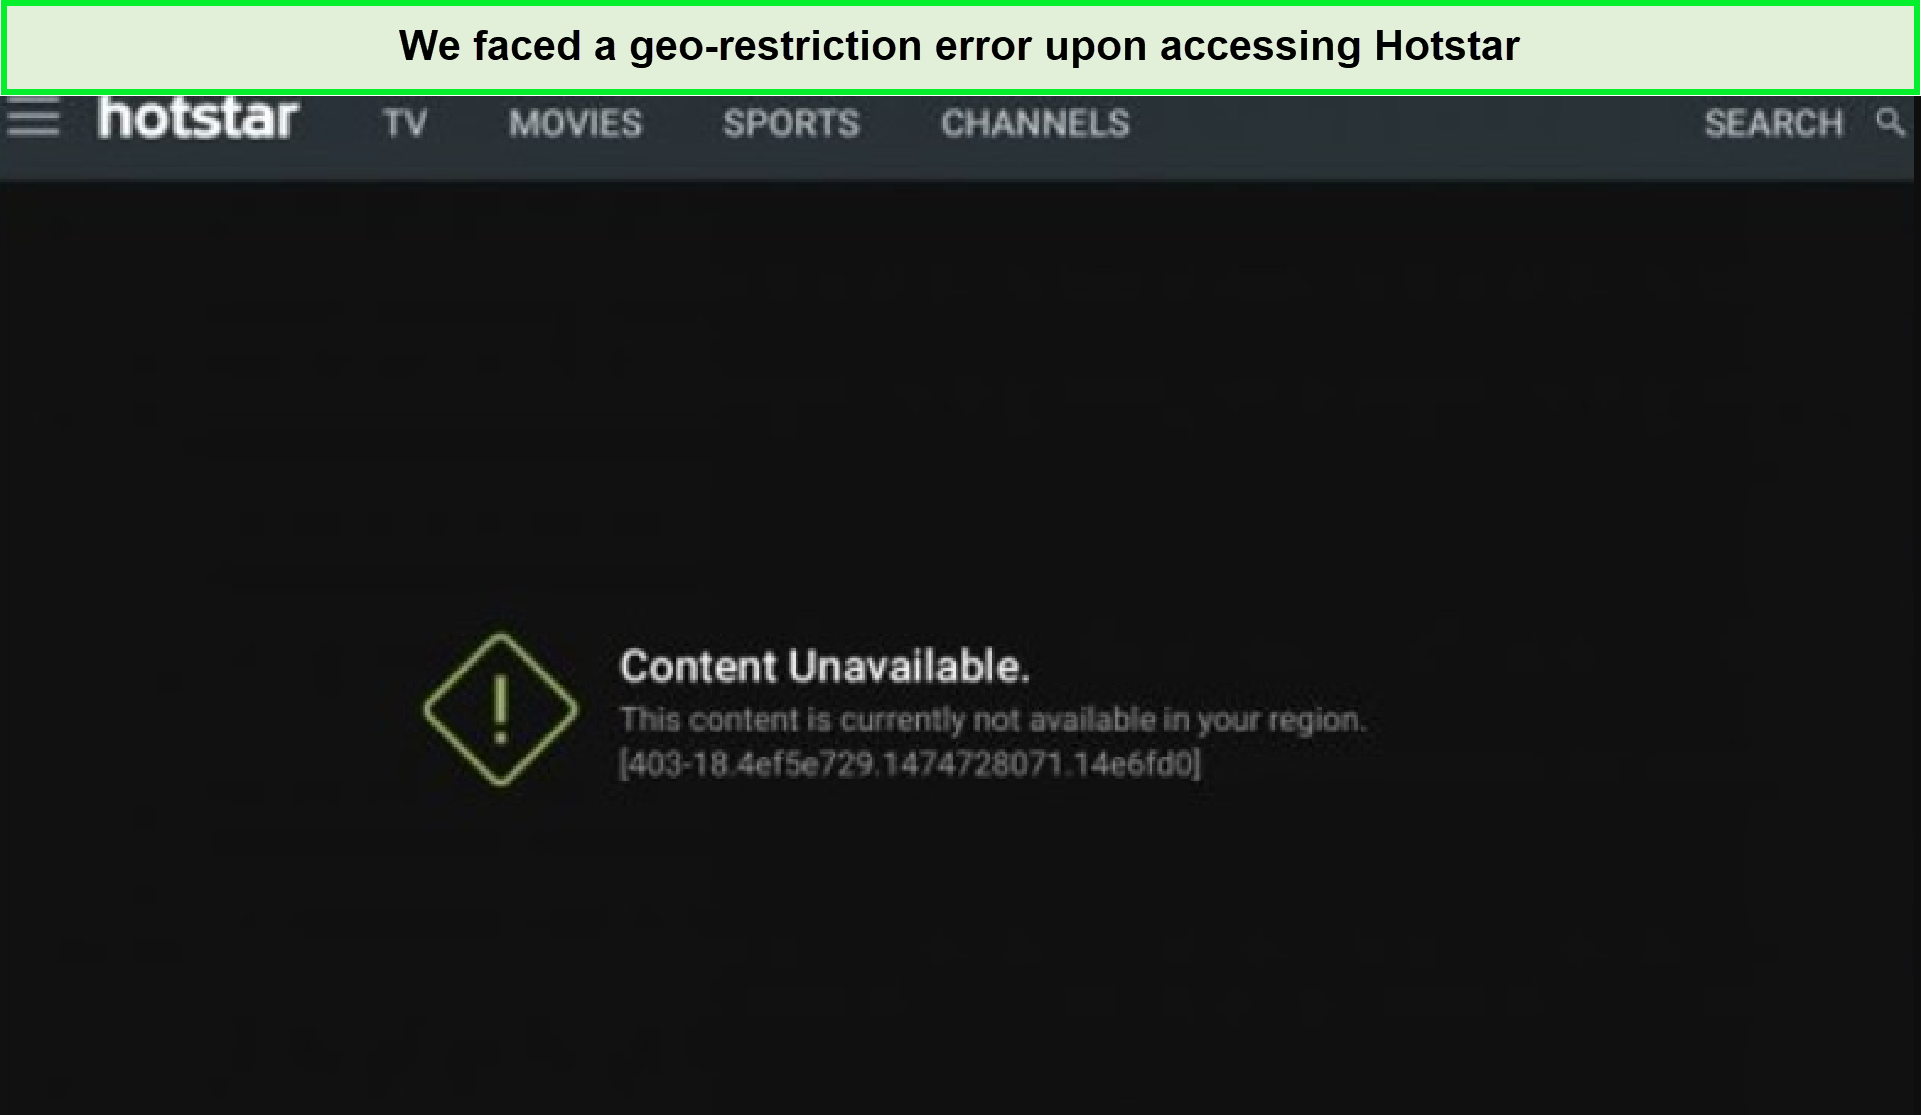 hotstar-in-France-geo-restriction-error